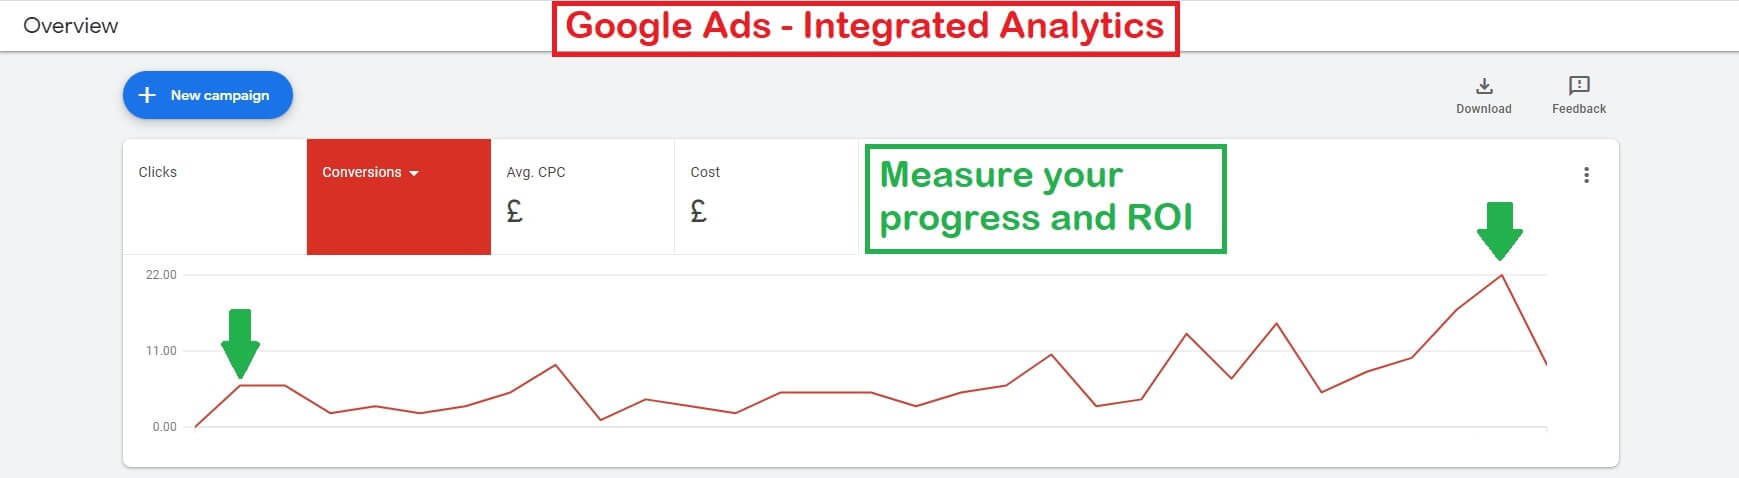 Google ads - Integrated Analytics